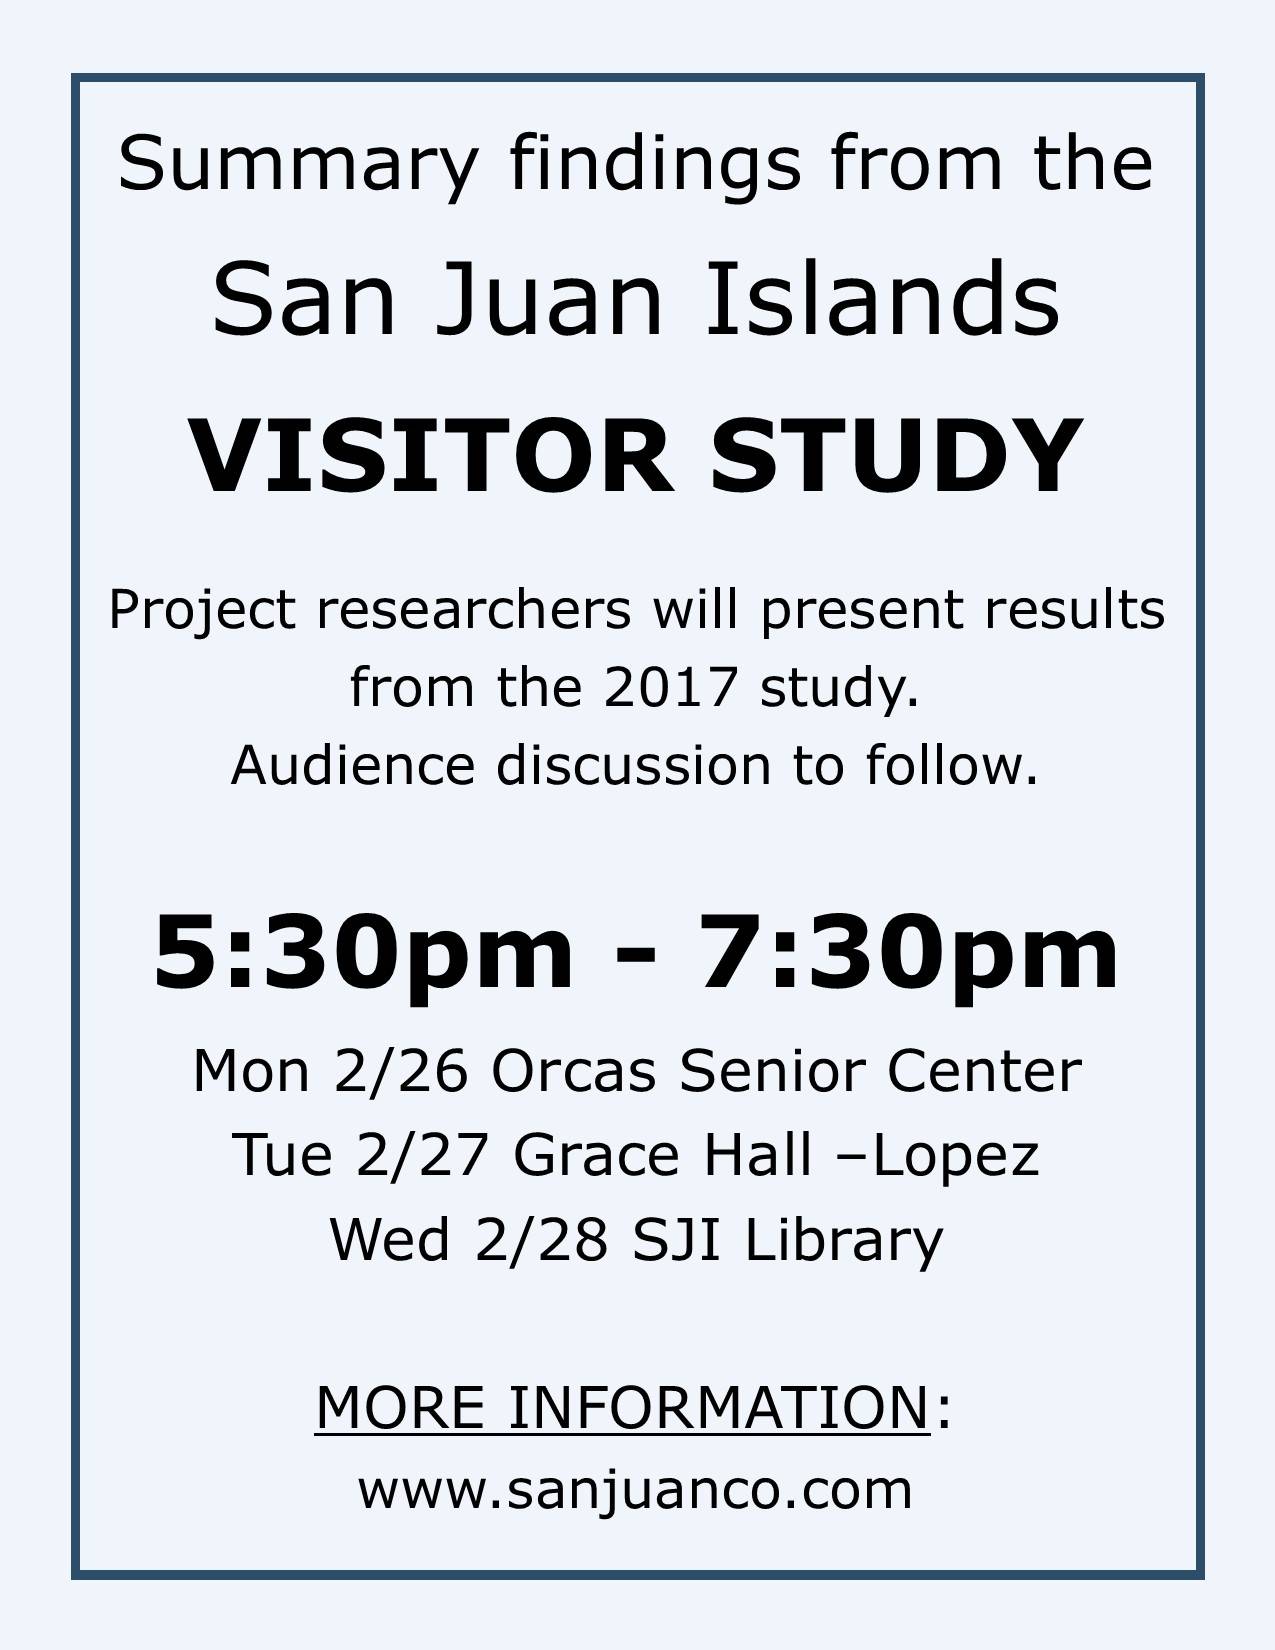 San Juan Islands Visitor Study presentations